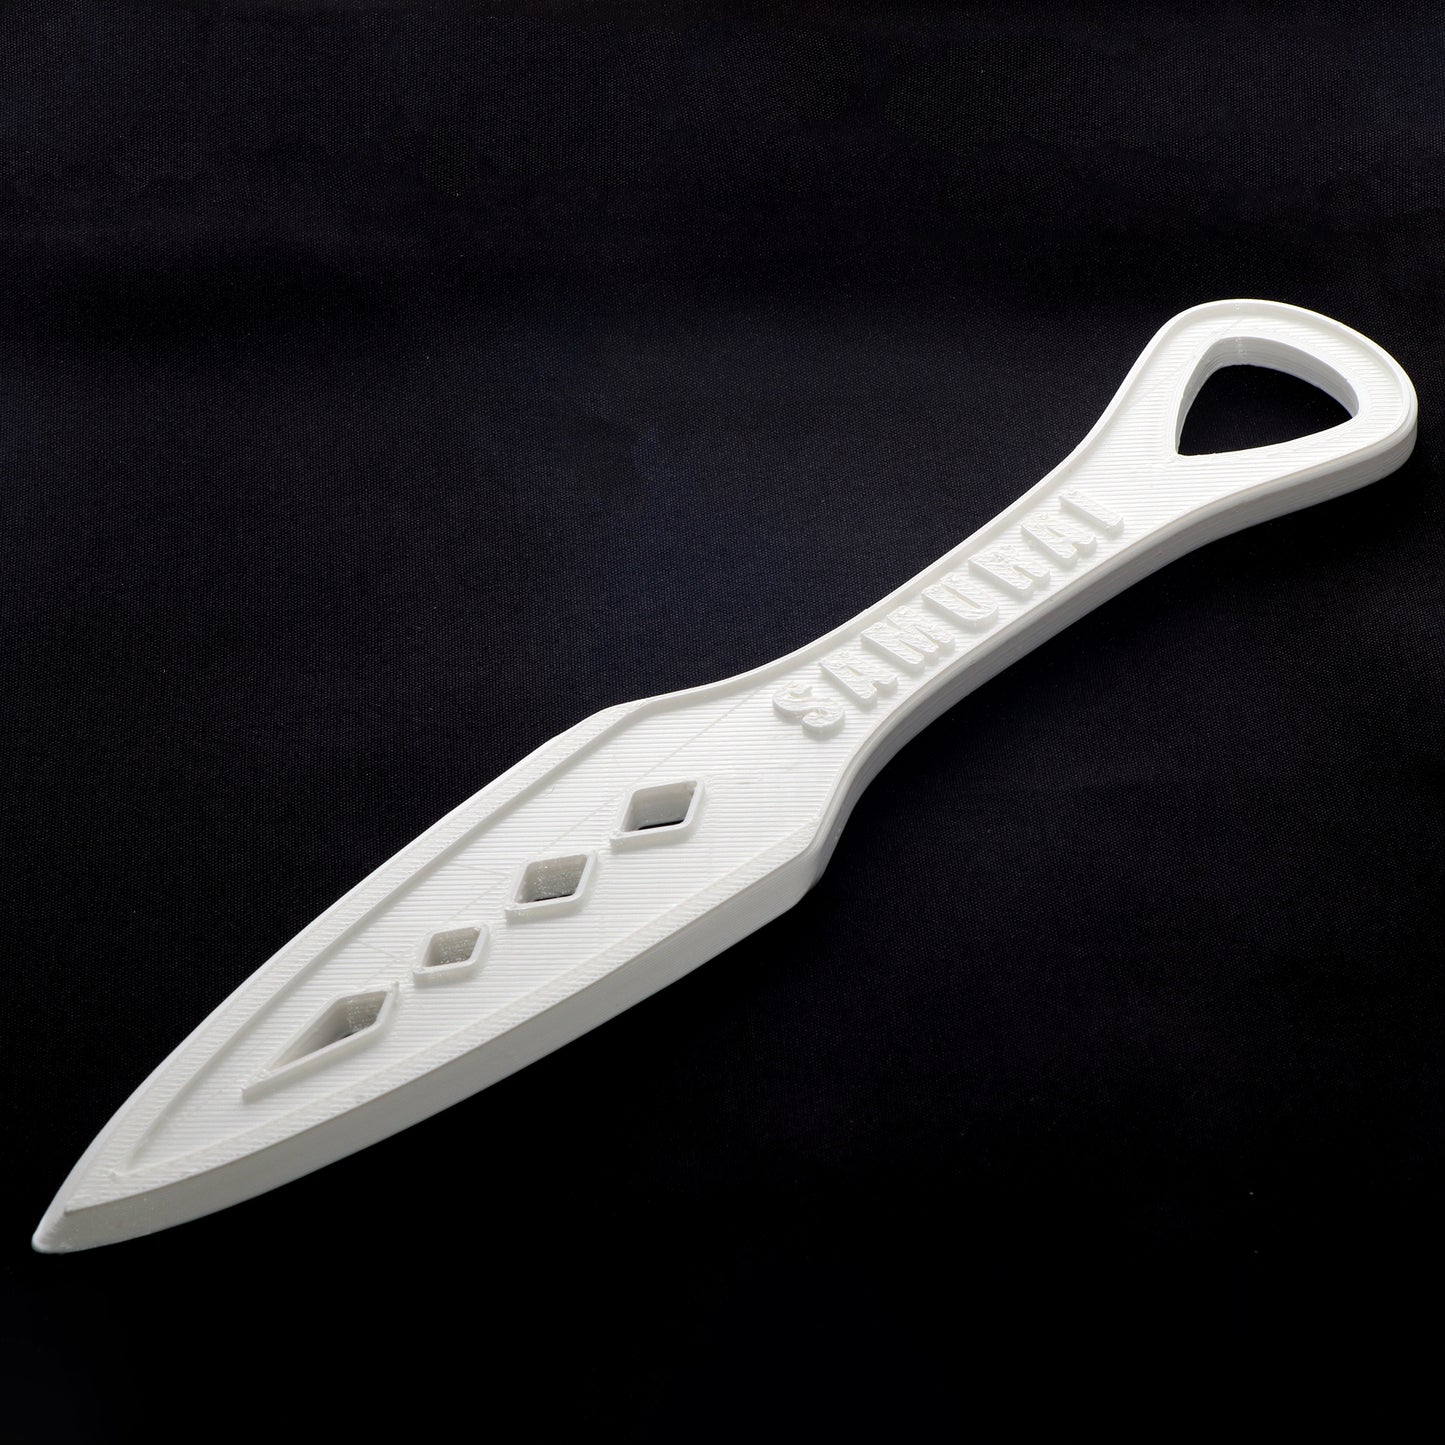 Soft kunai knife with inscription